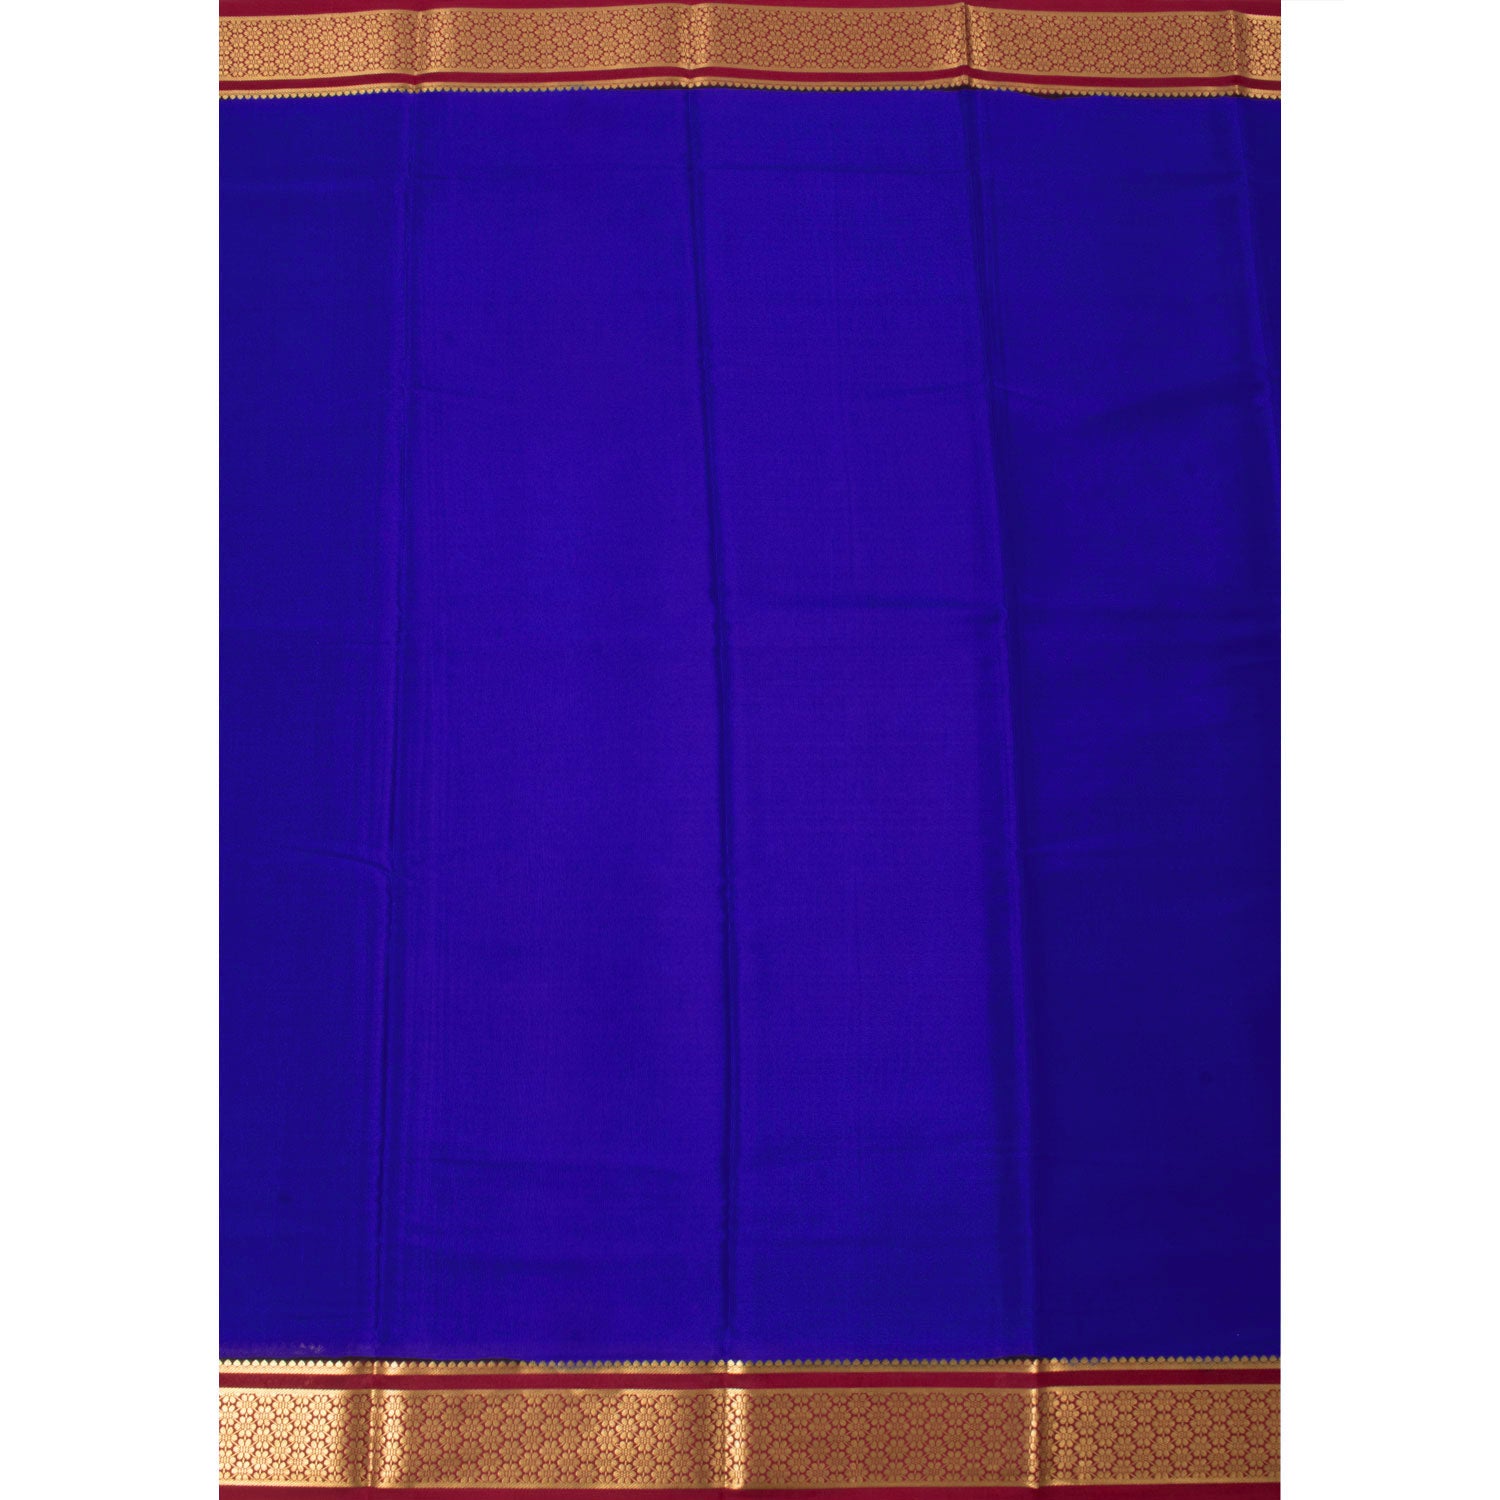 Madisaar 9 Yards Saree Draping Significance by Shanthi Seshadari -  Indoindians.com